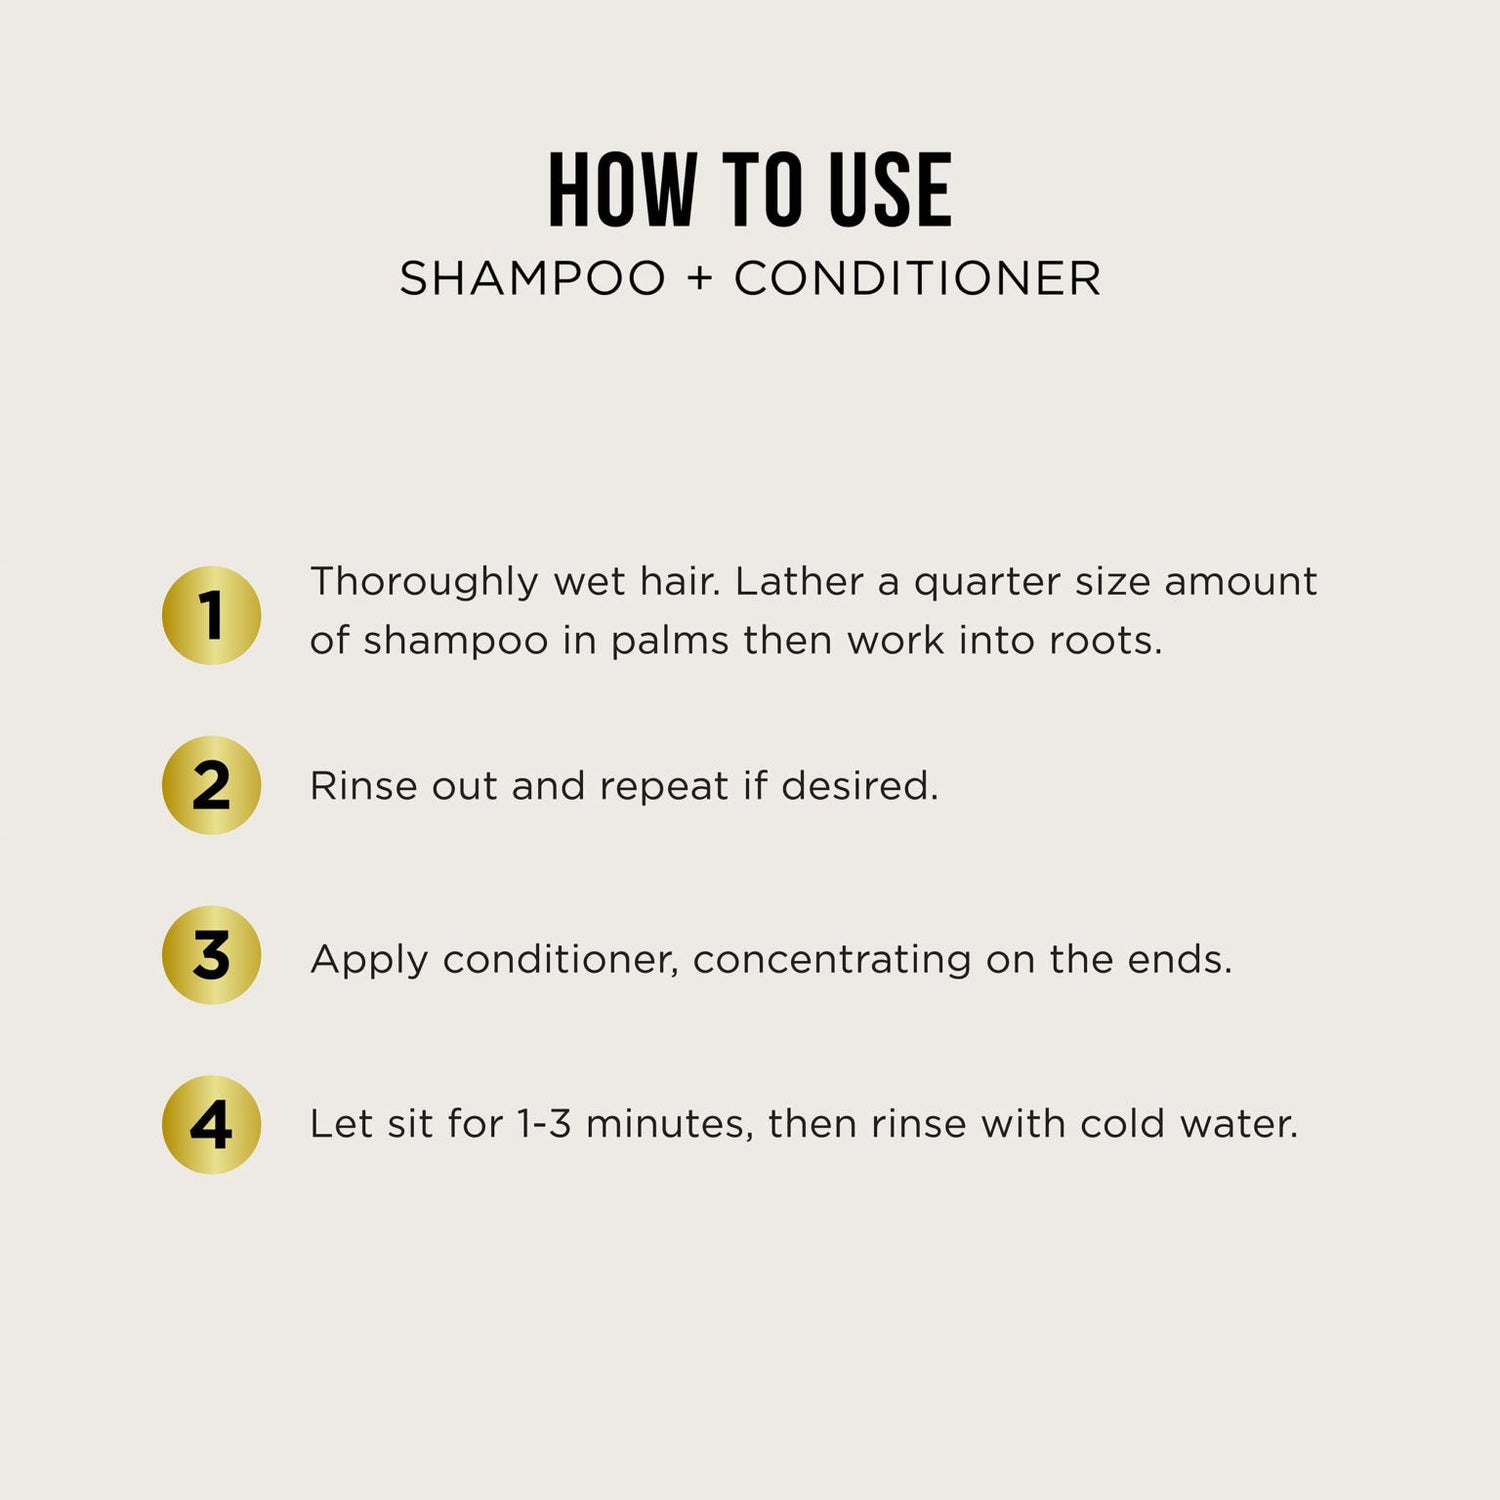 HASK Argan Oil Repairing Shampoo + Conditioner Combo